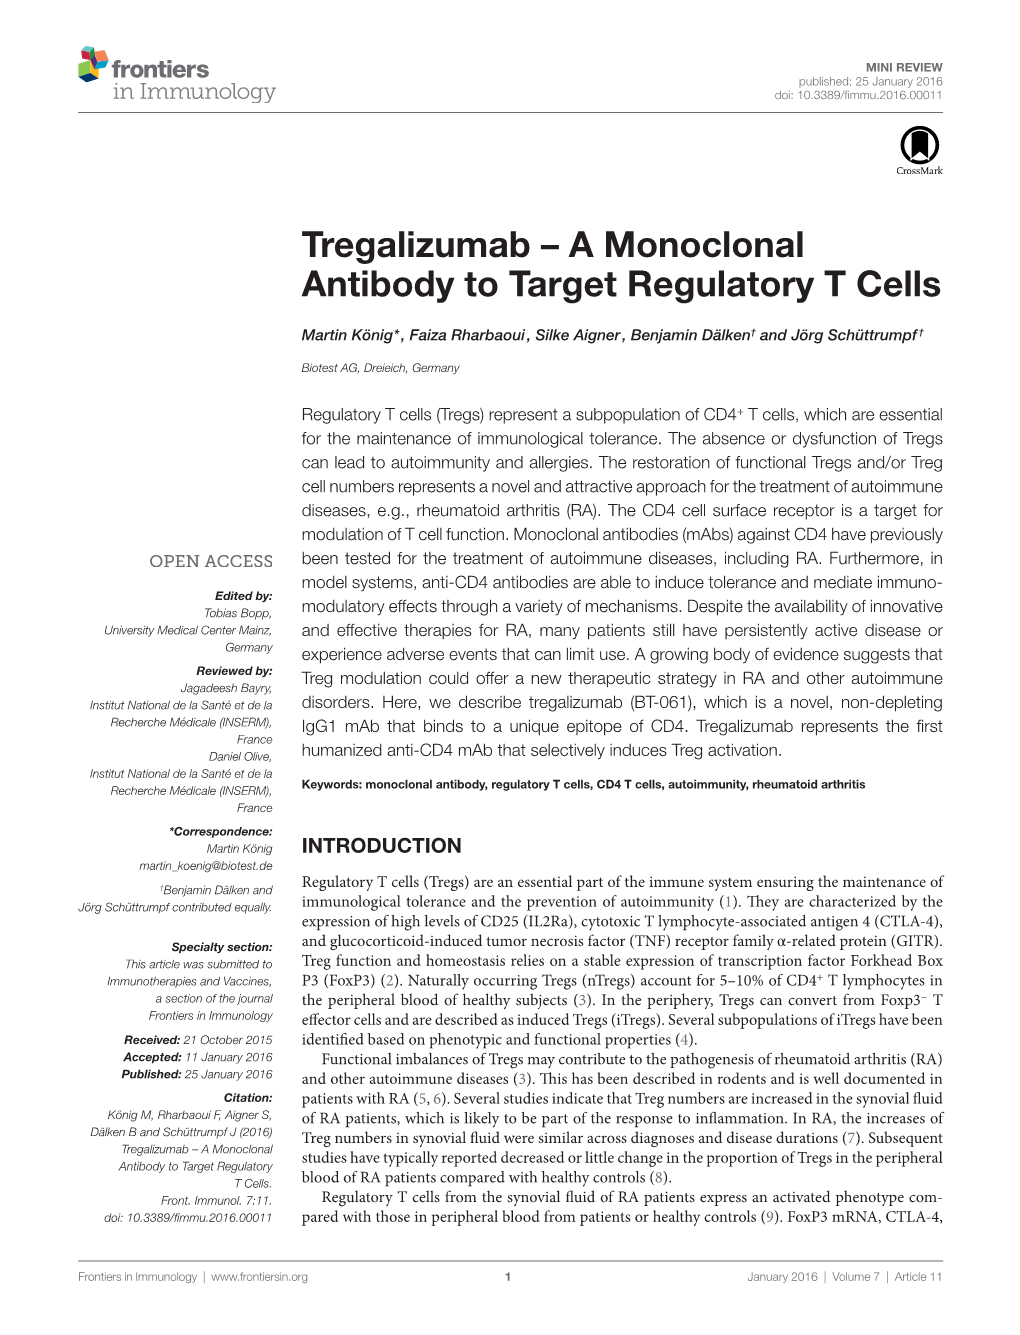 A Monoclonal Antibody to Target Regulatory T Cells